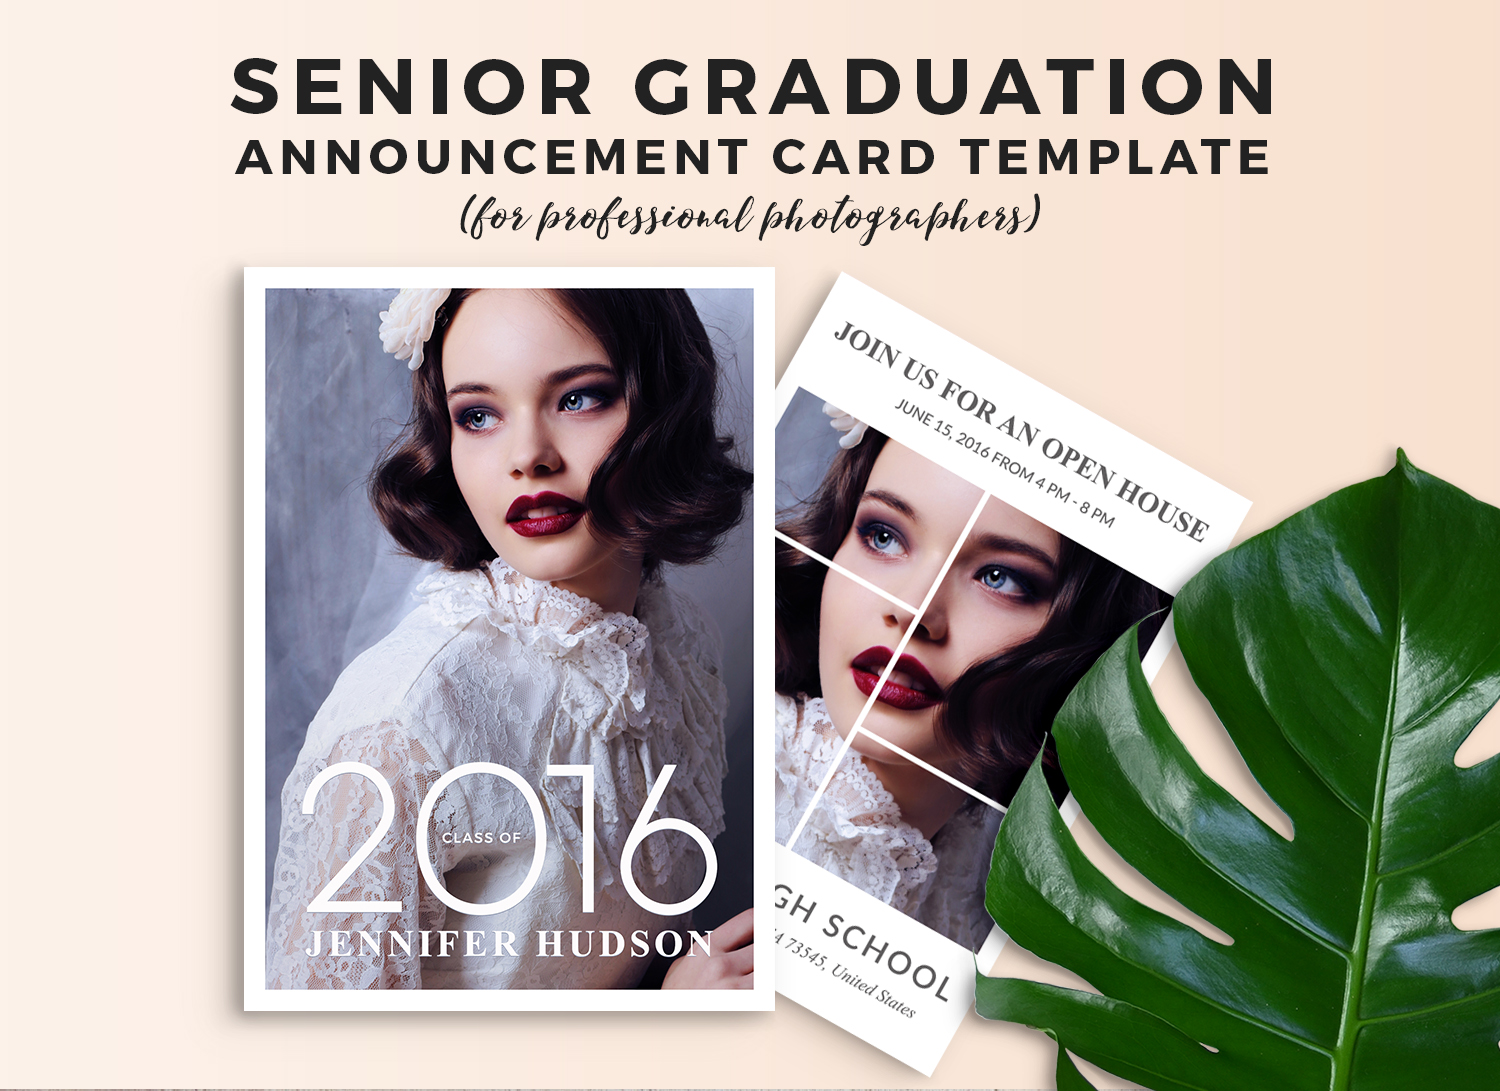 Senior graduation announcement card template